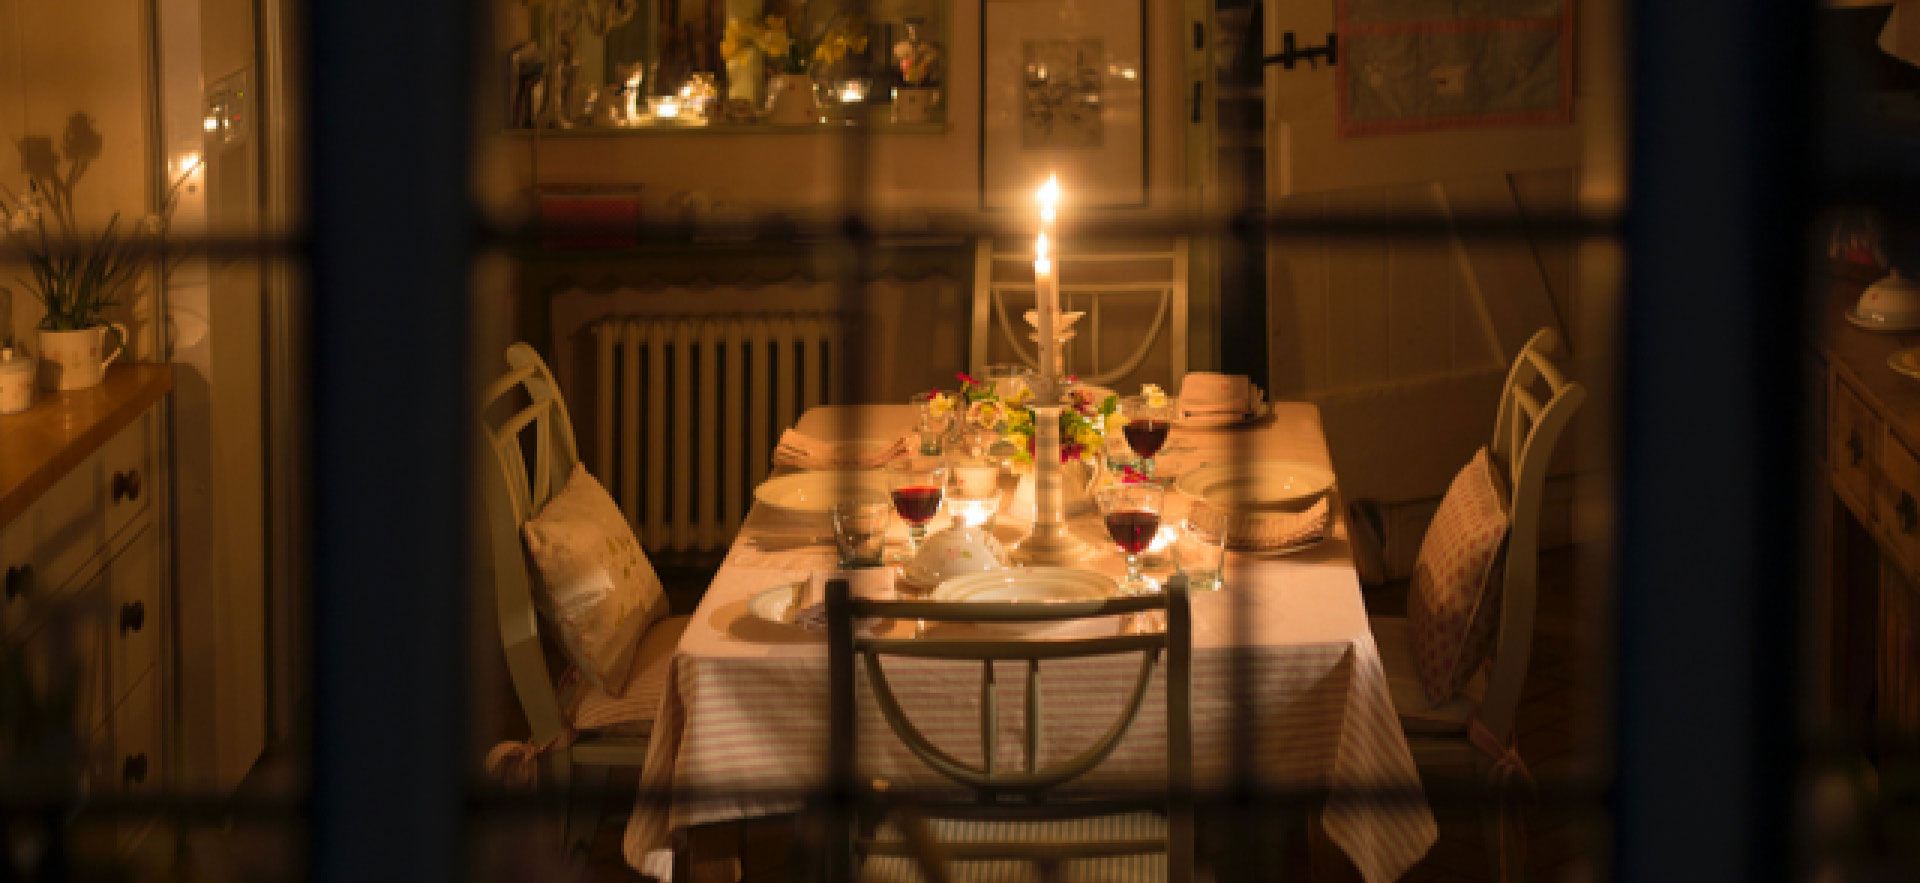 Autumn table, rose tablecloth